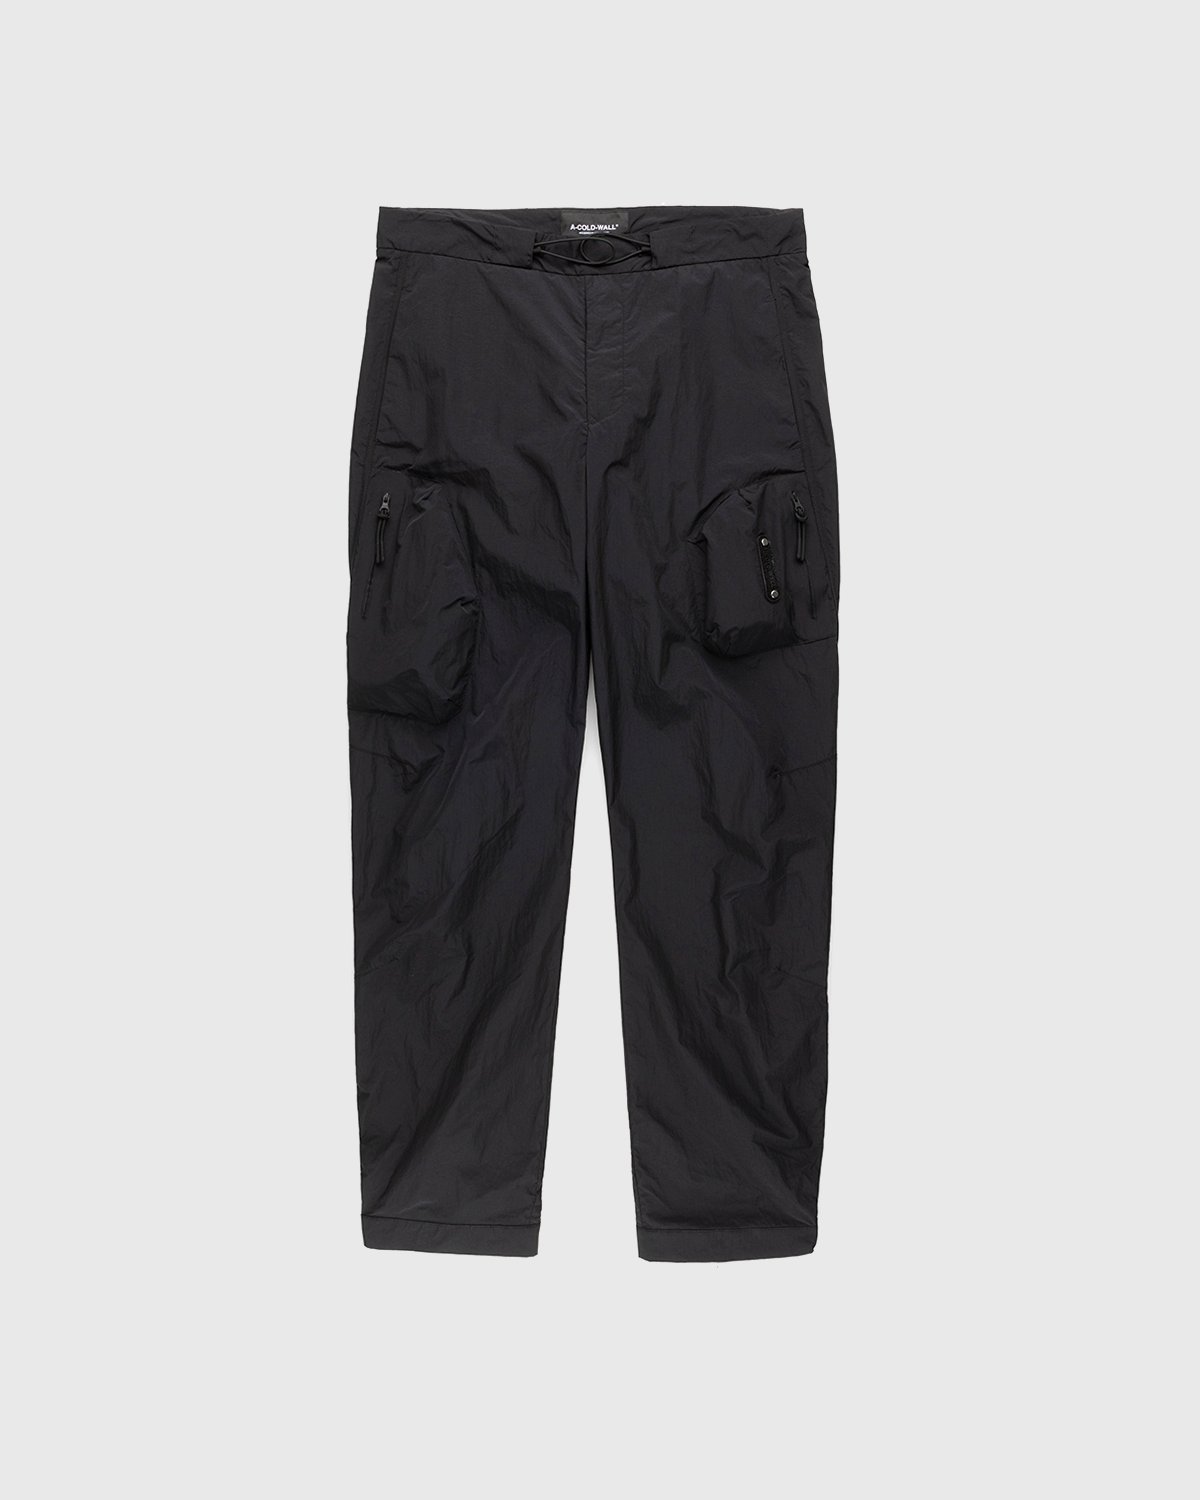 A-Cold-Wall* - Portage Pant Black - Clothing - Black - Image 1